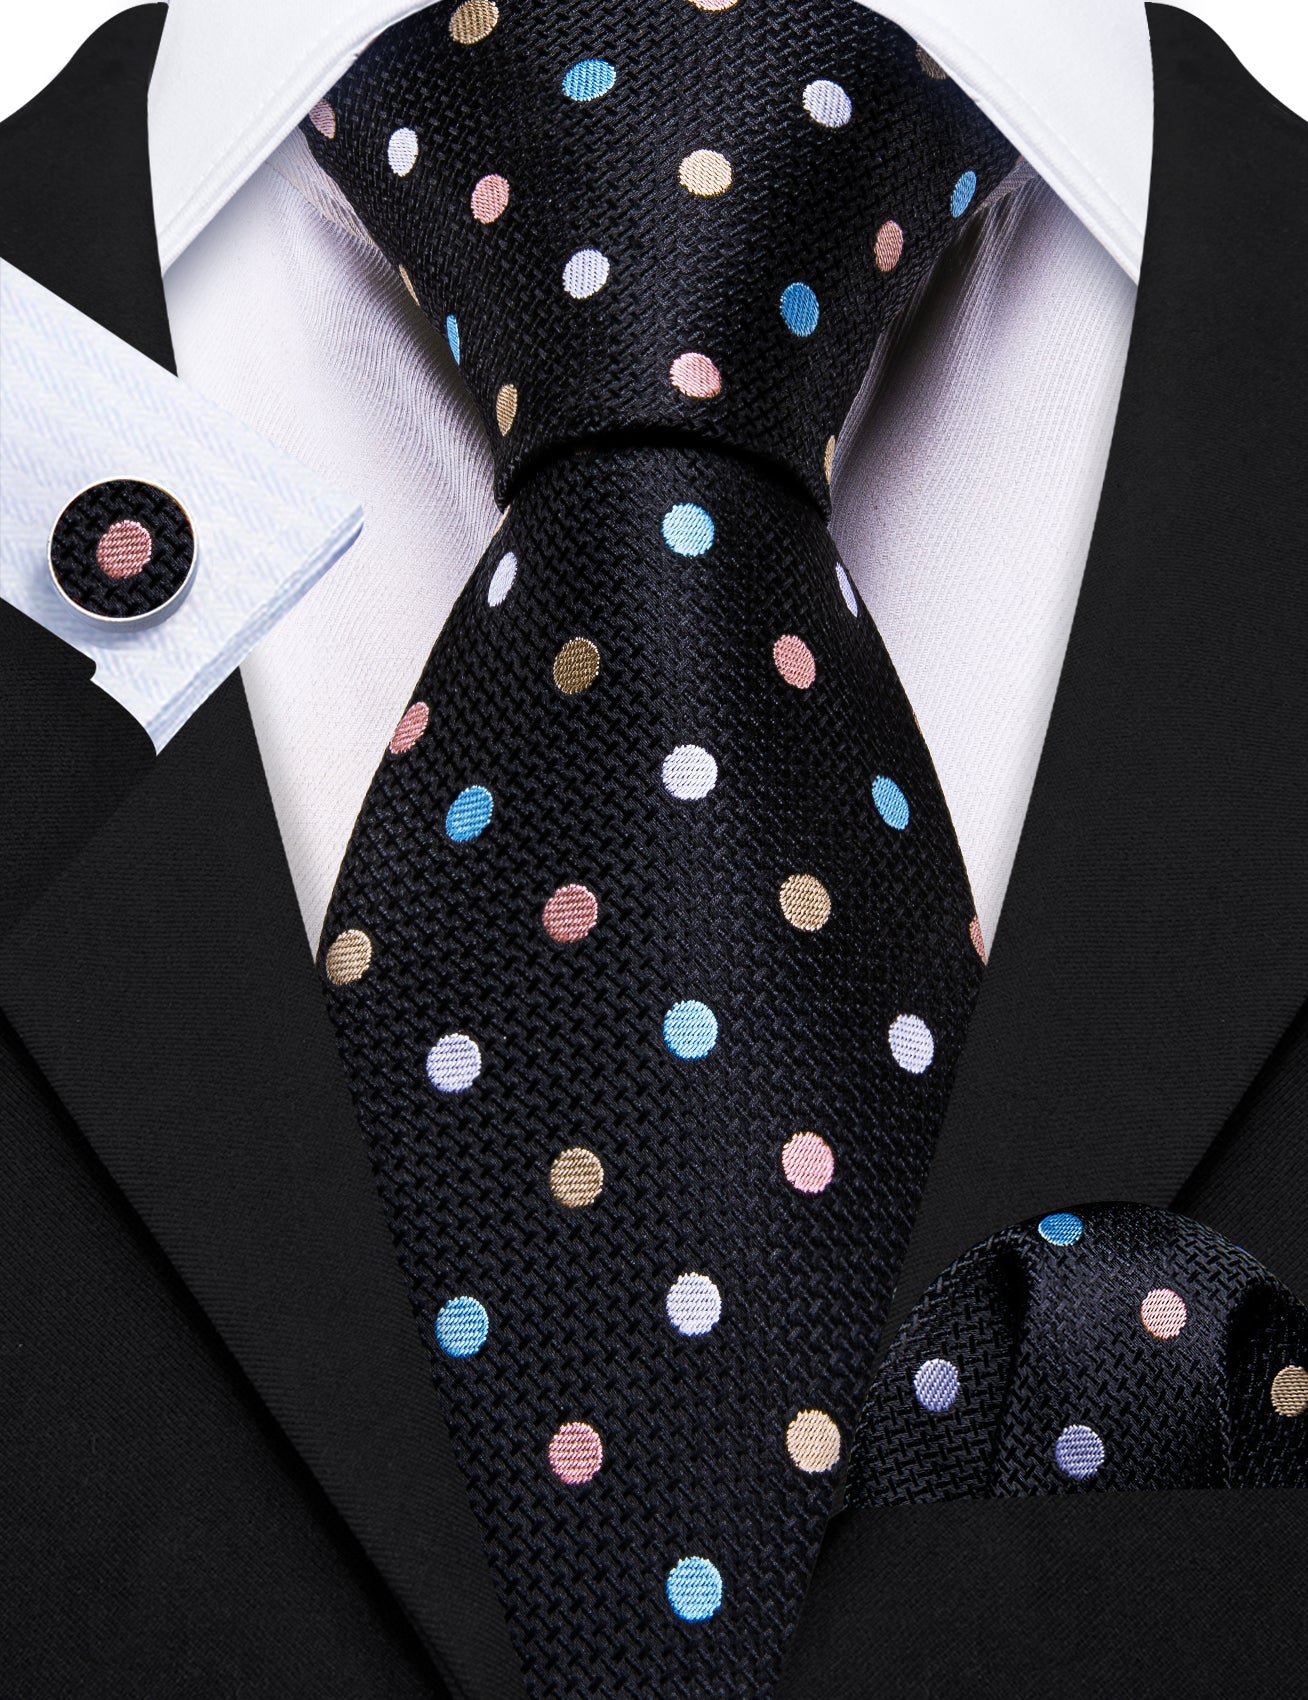 Black suit  white shirt polka dots necktie 